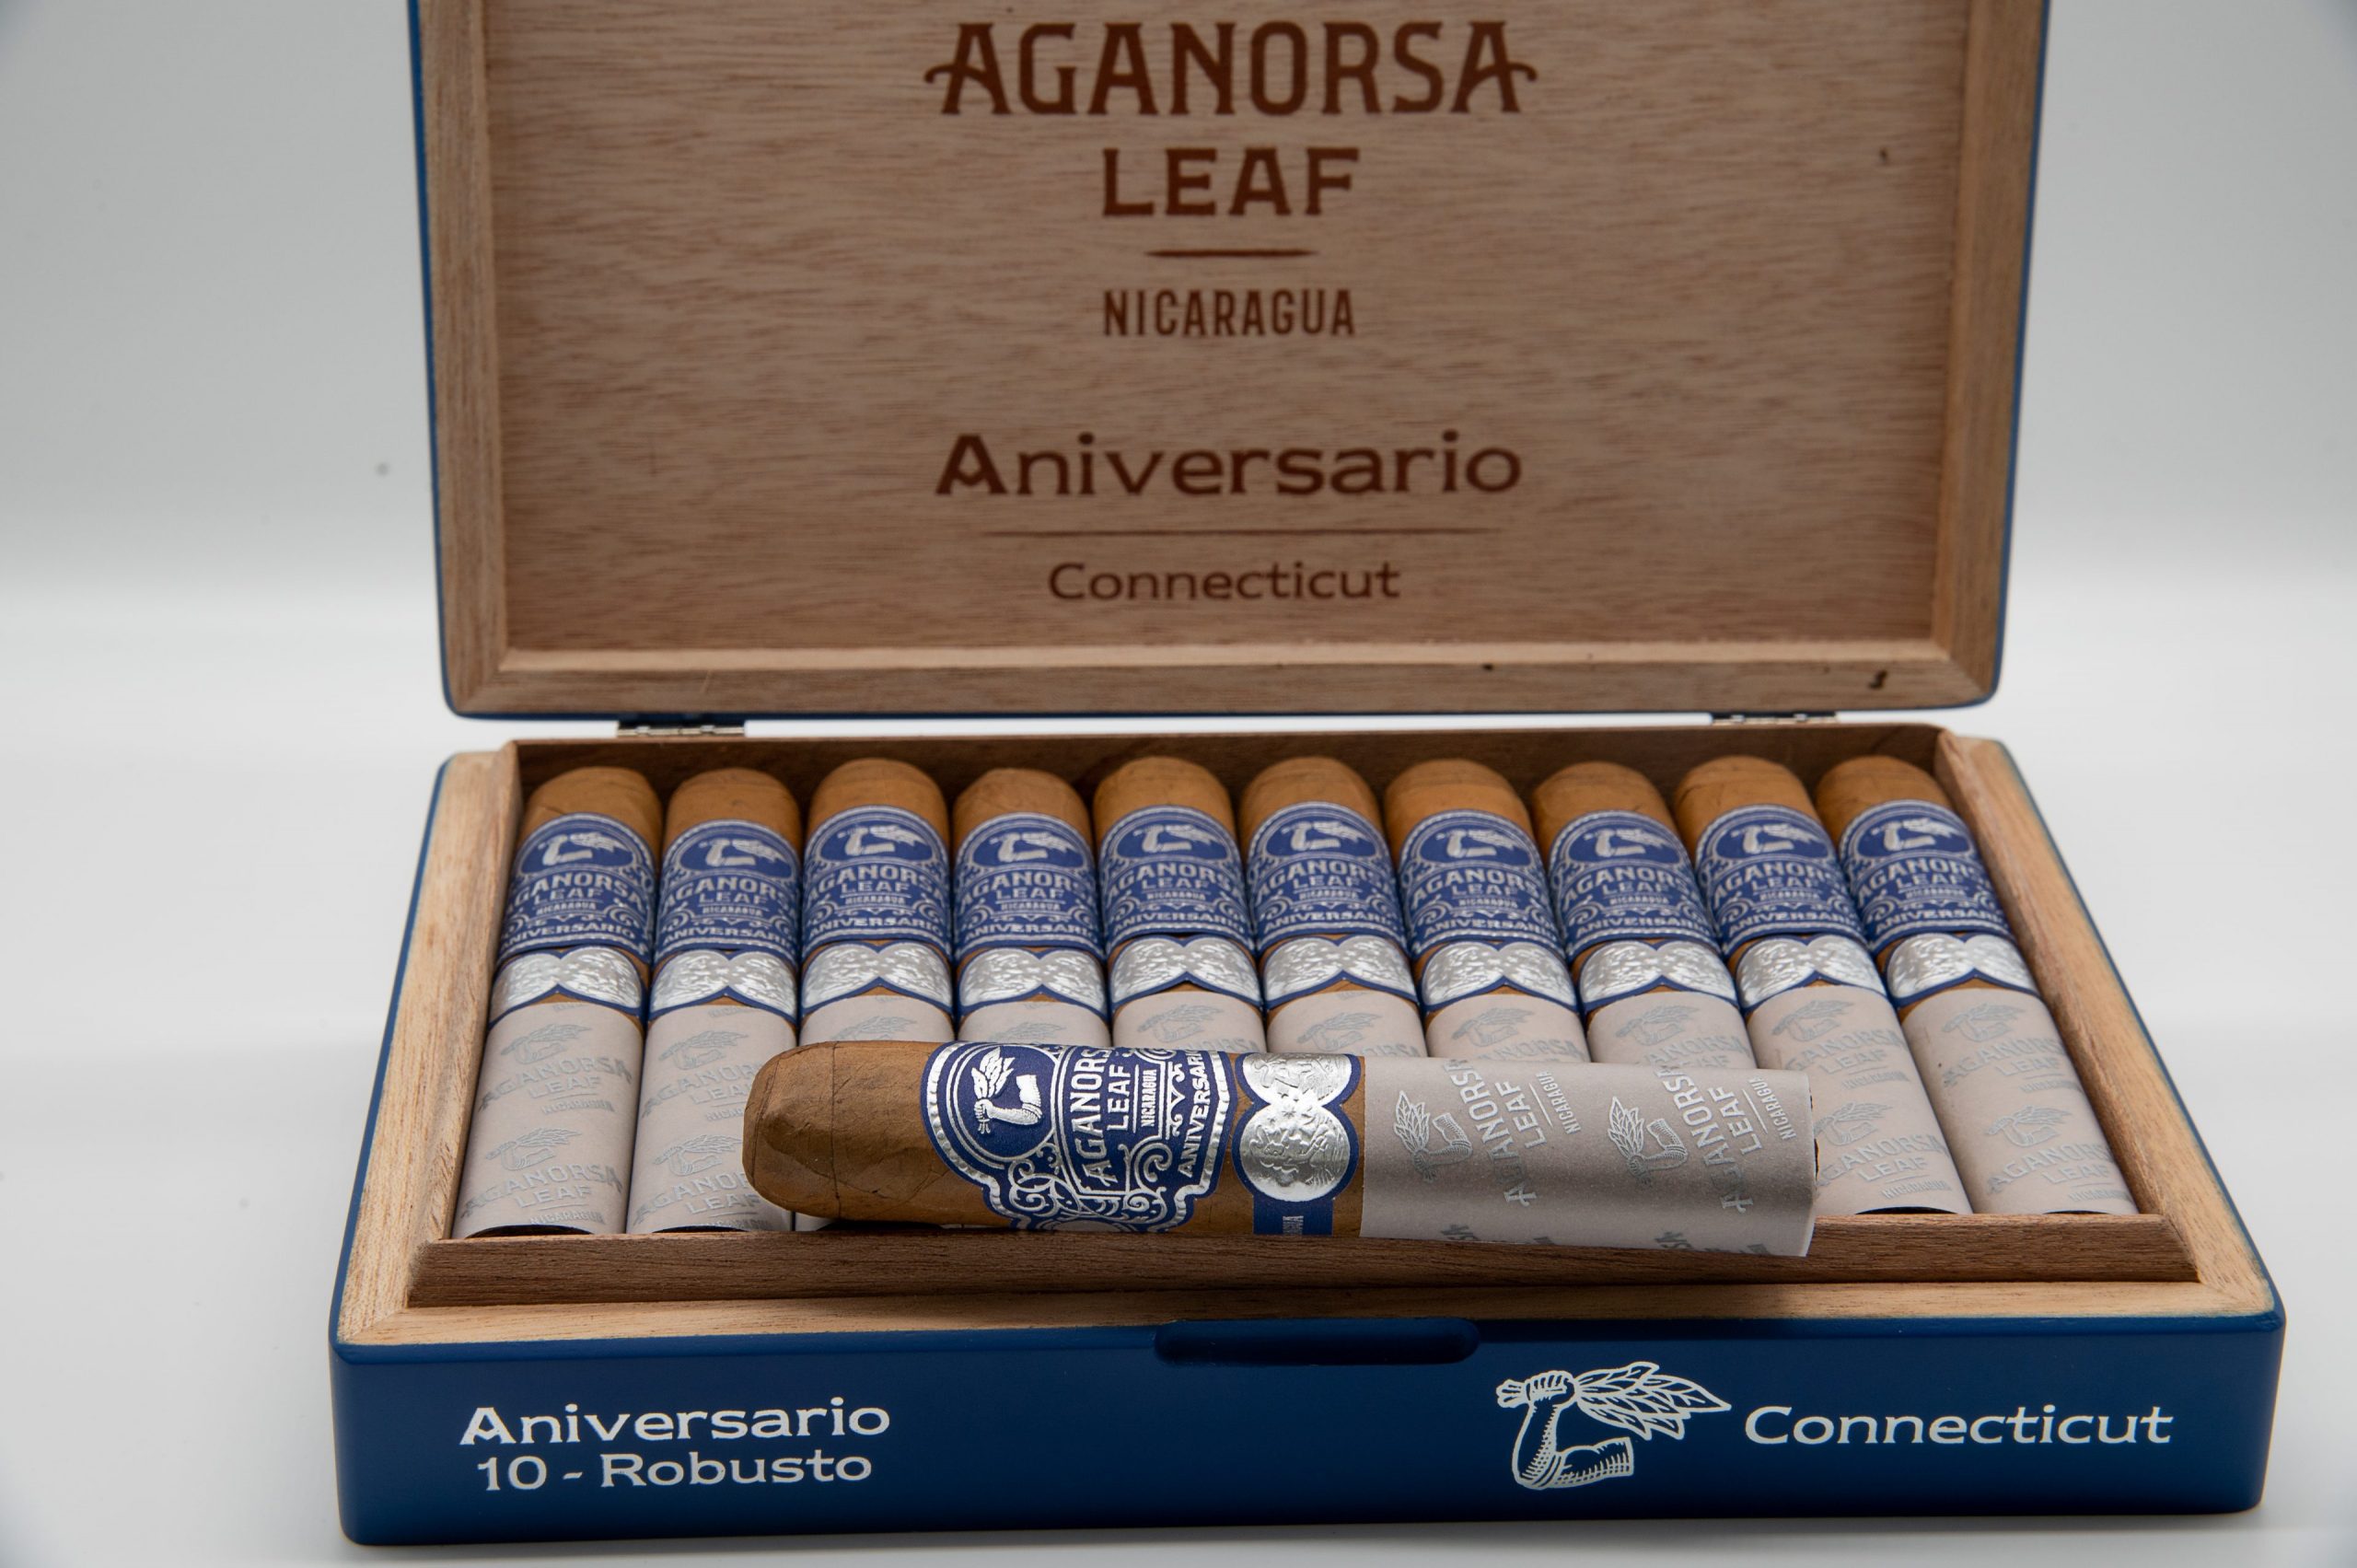 aganorsa-leaf-announces-aniversario-connecticut-for-pca-–-cigar-news